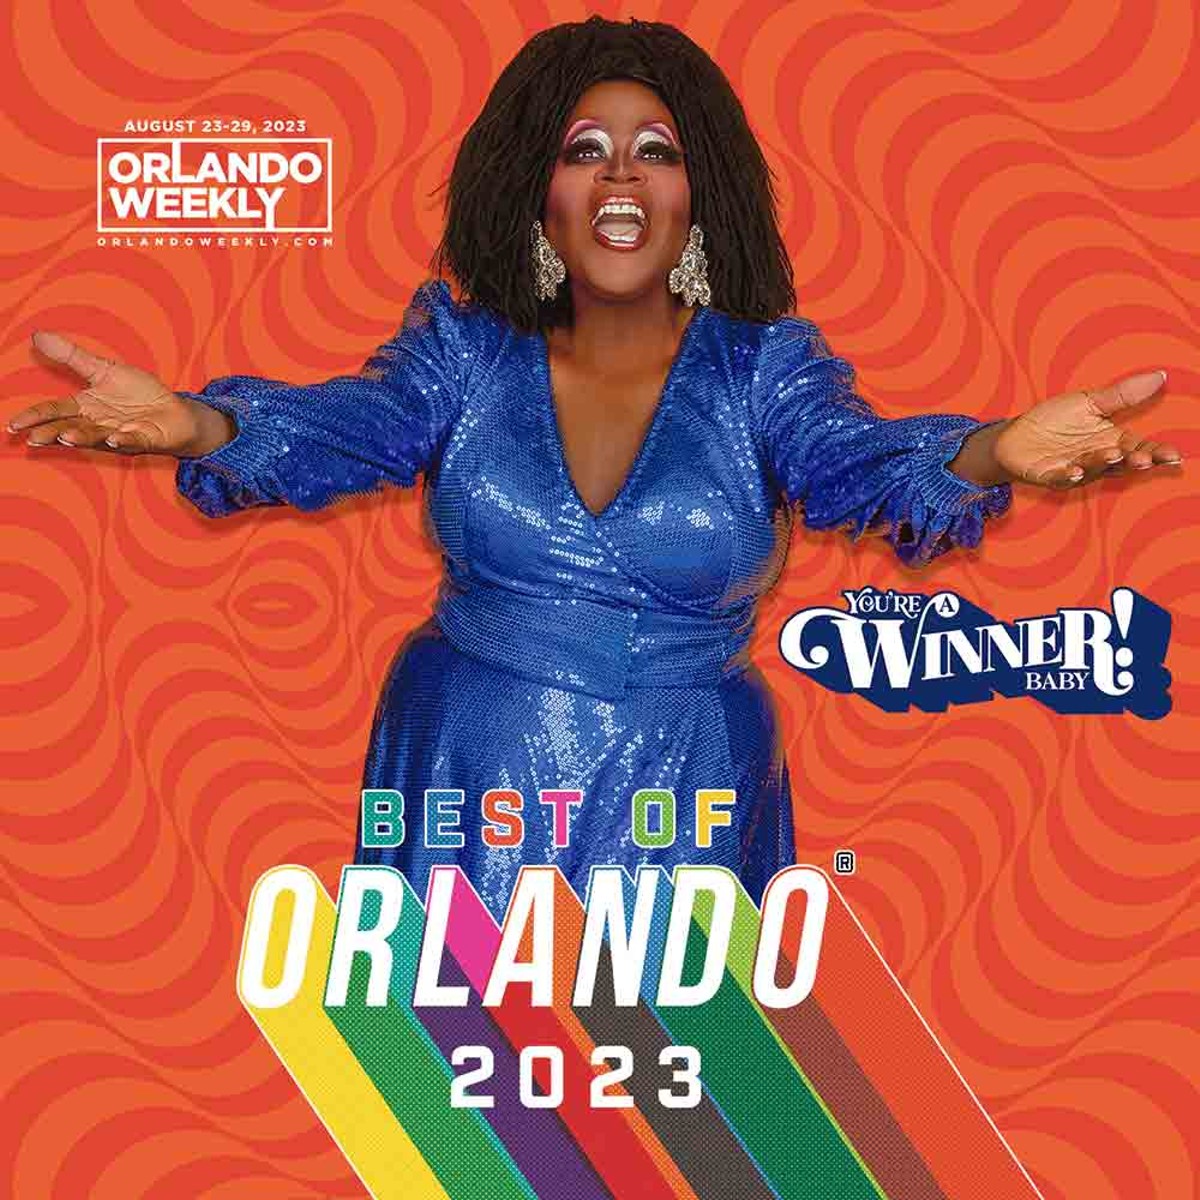 Best of Orlando© 2023